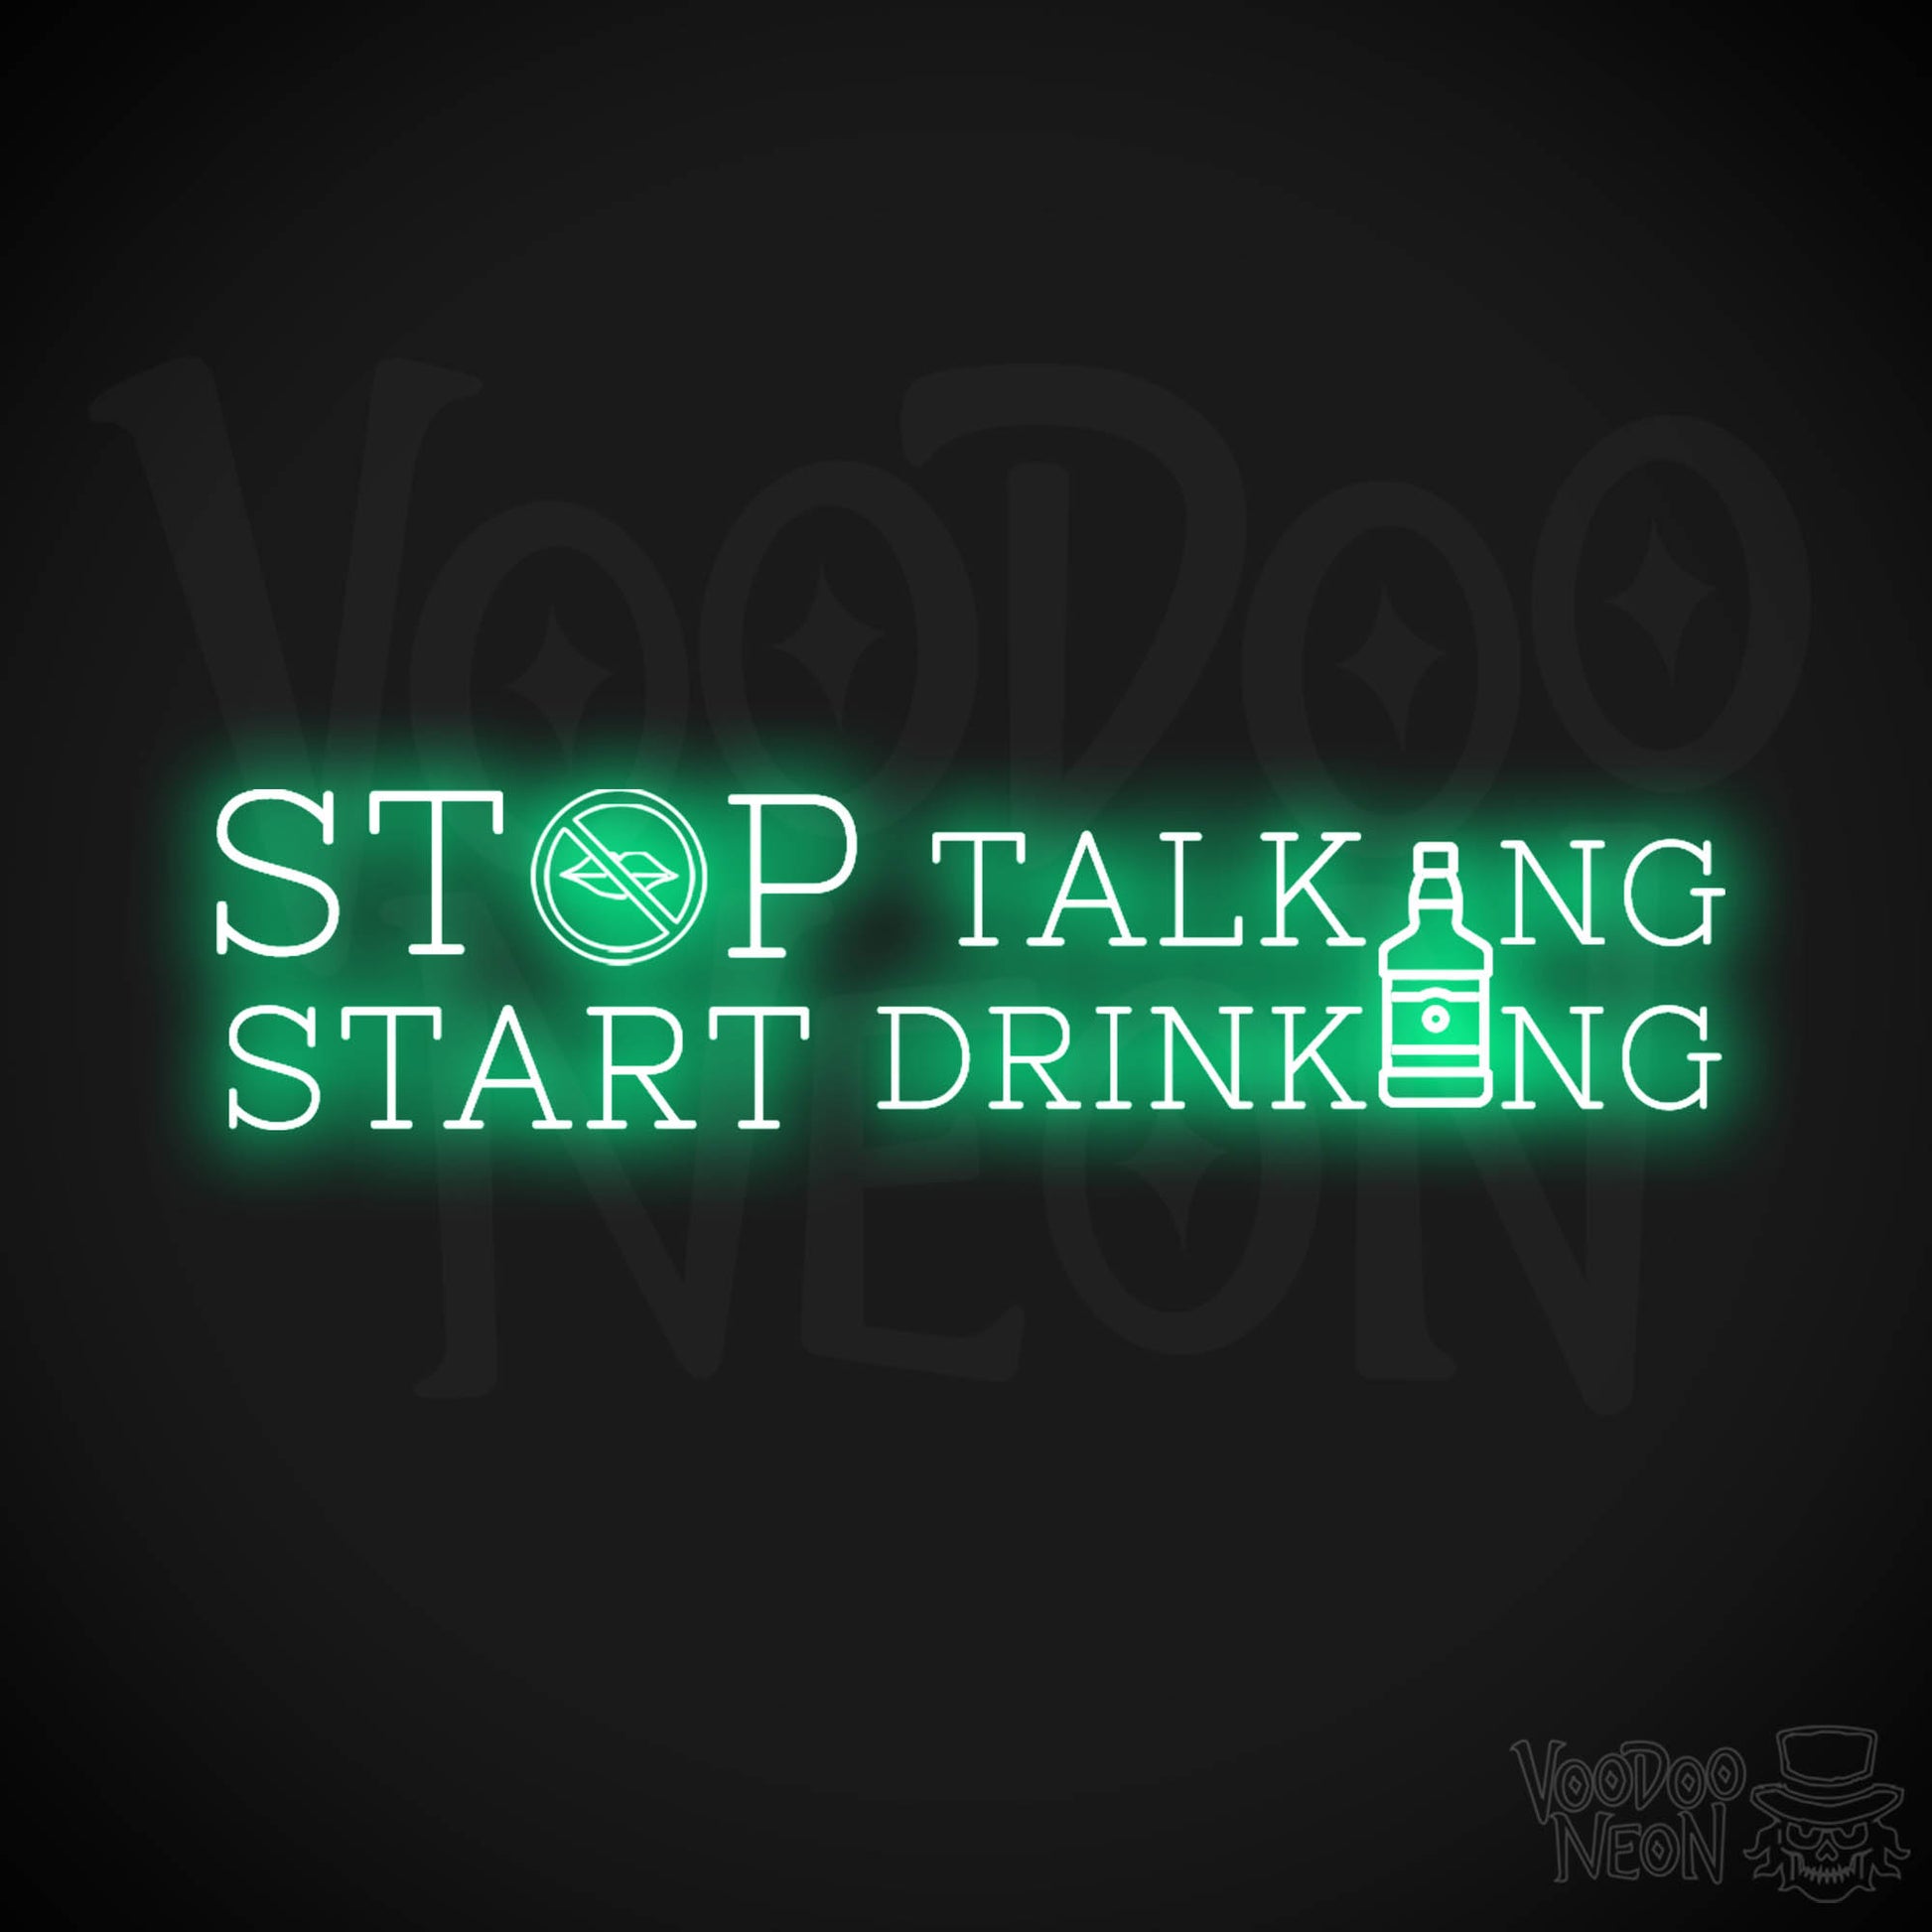 Stop Talking Start Drinking Neon Sign - Stop Talking Start Drinking Sign - Color Green